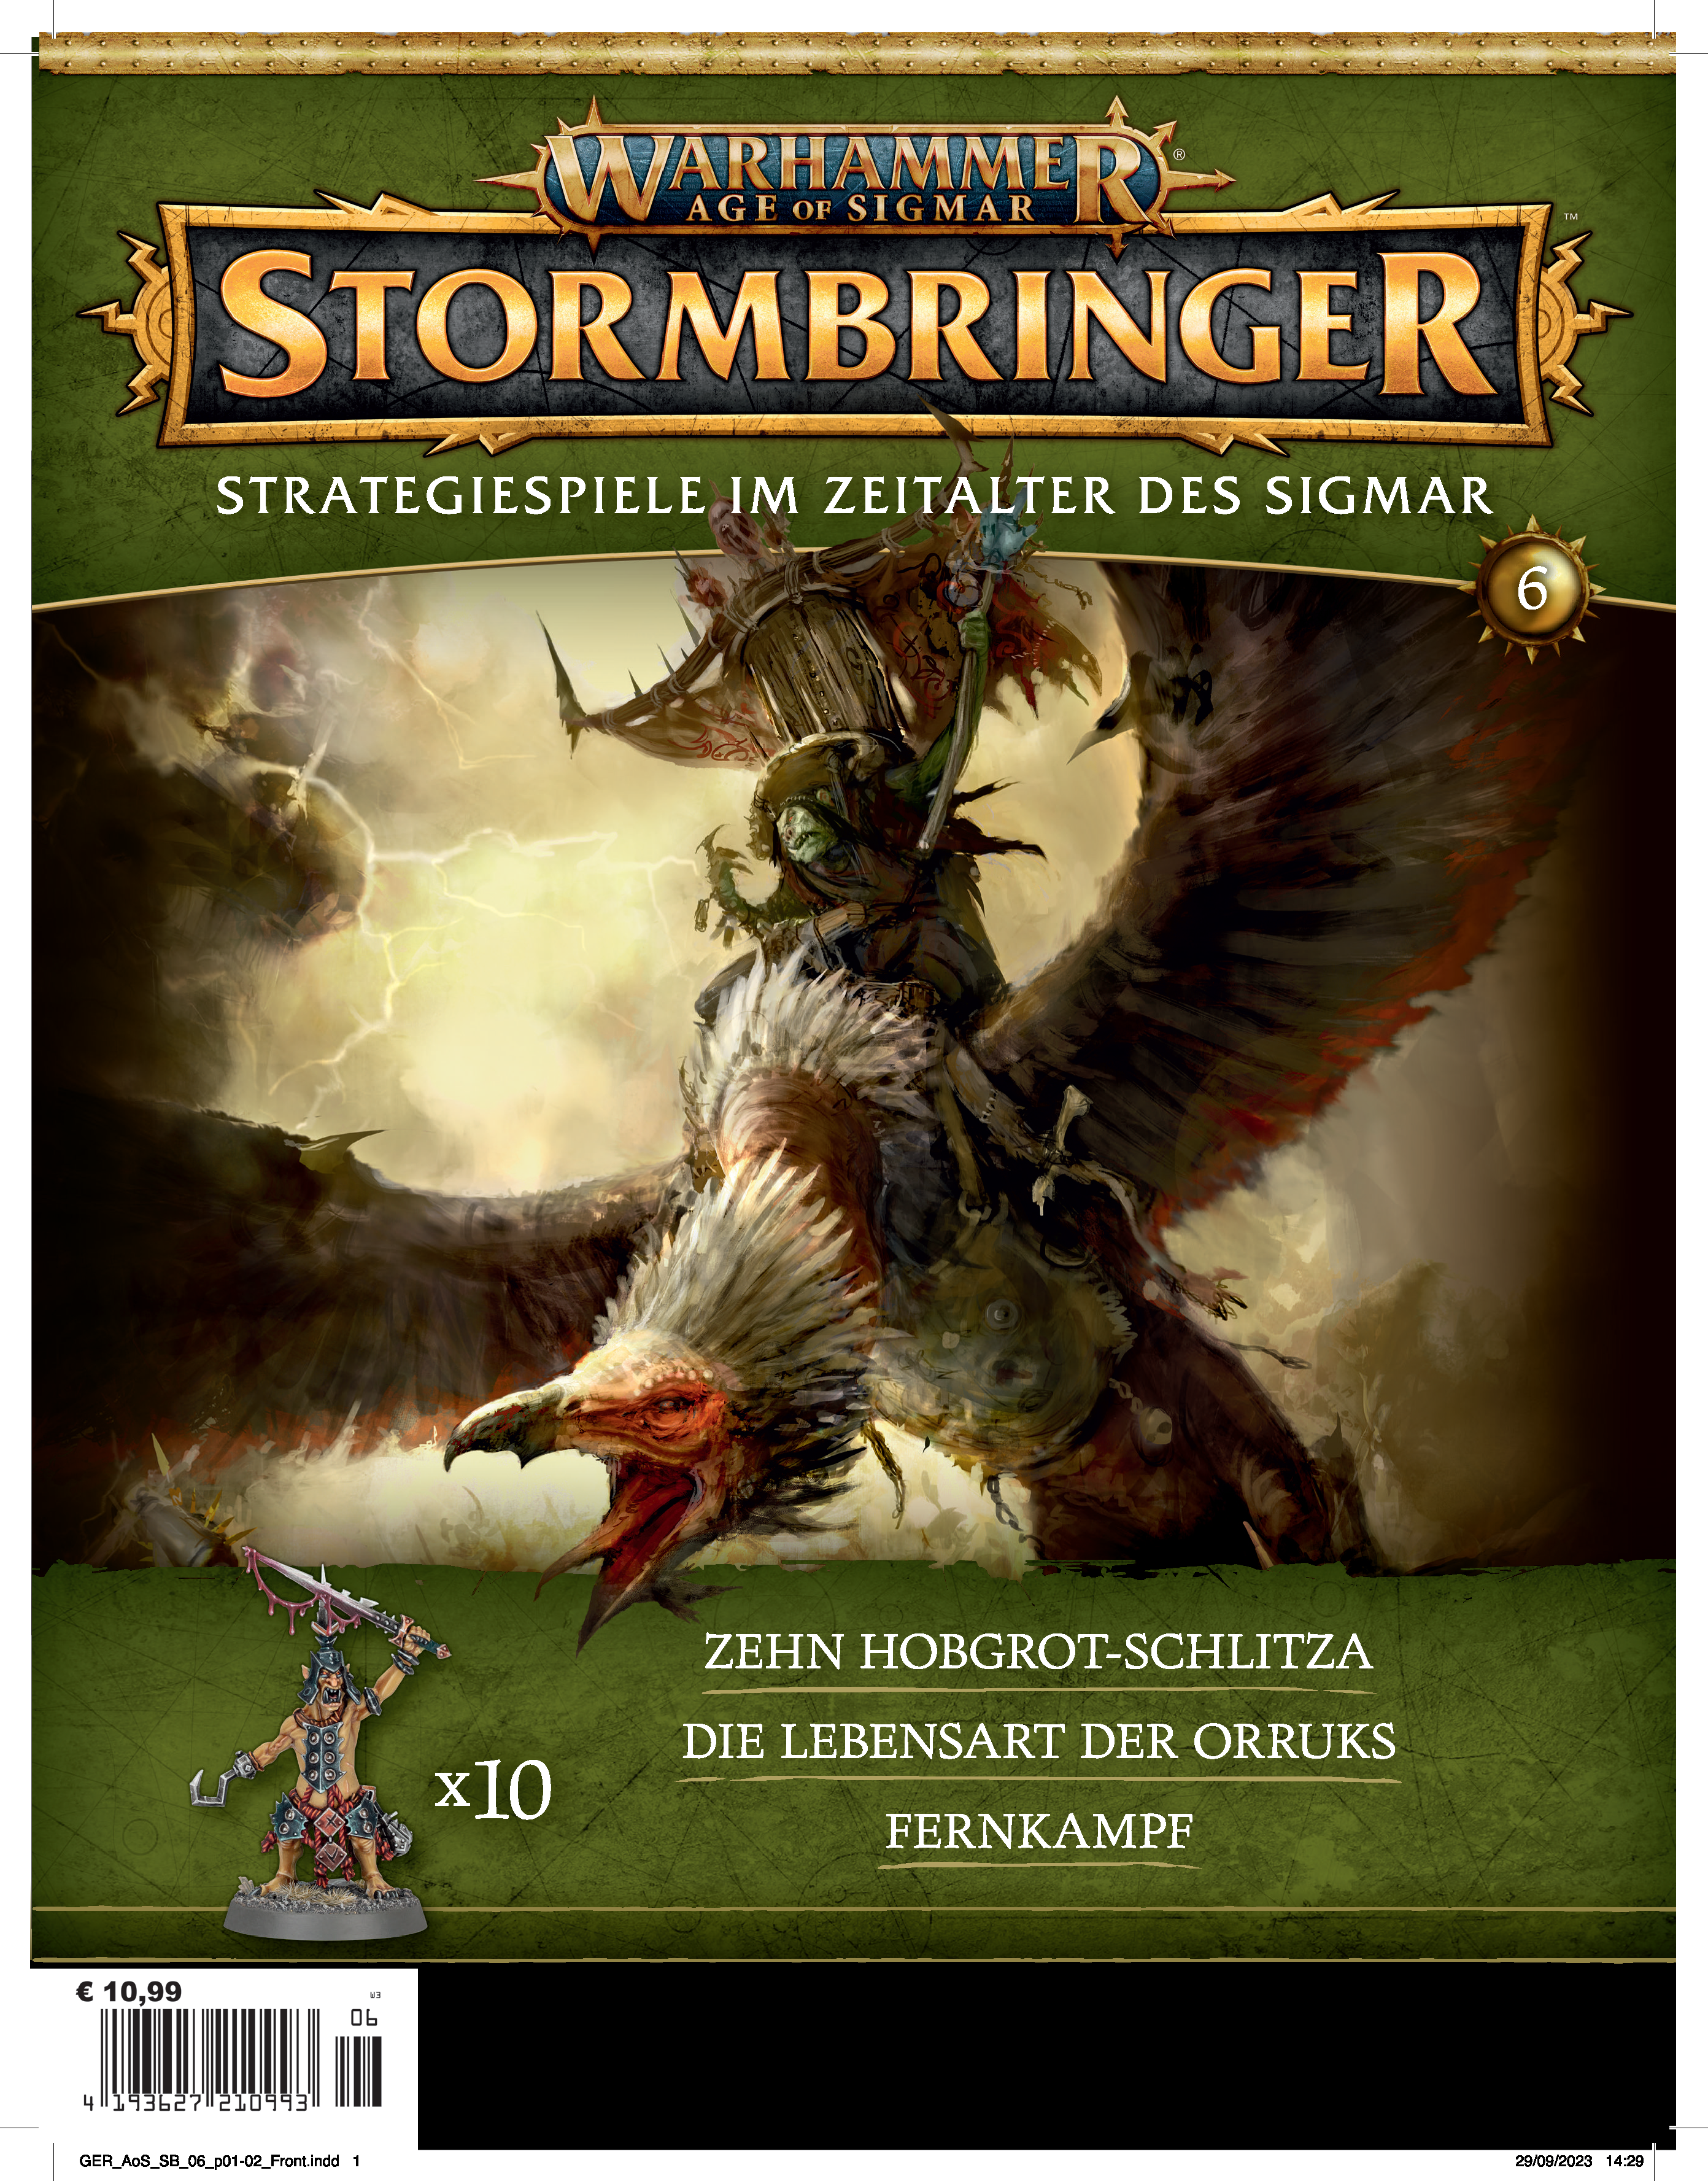 Warhammer Stormbringer – Ausgabe 006